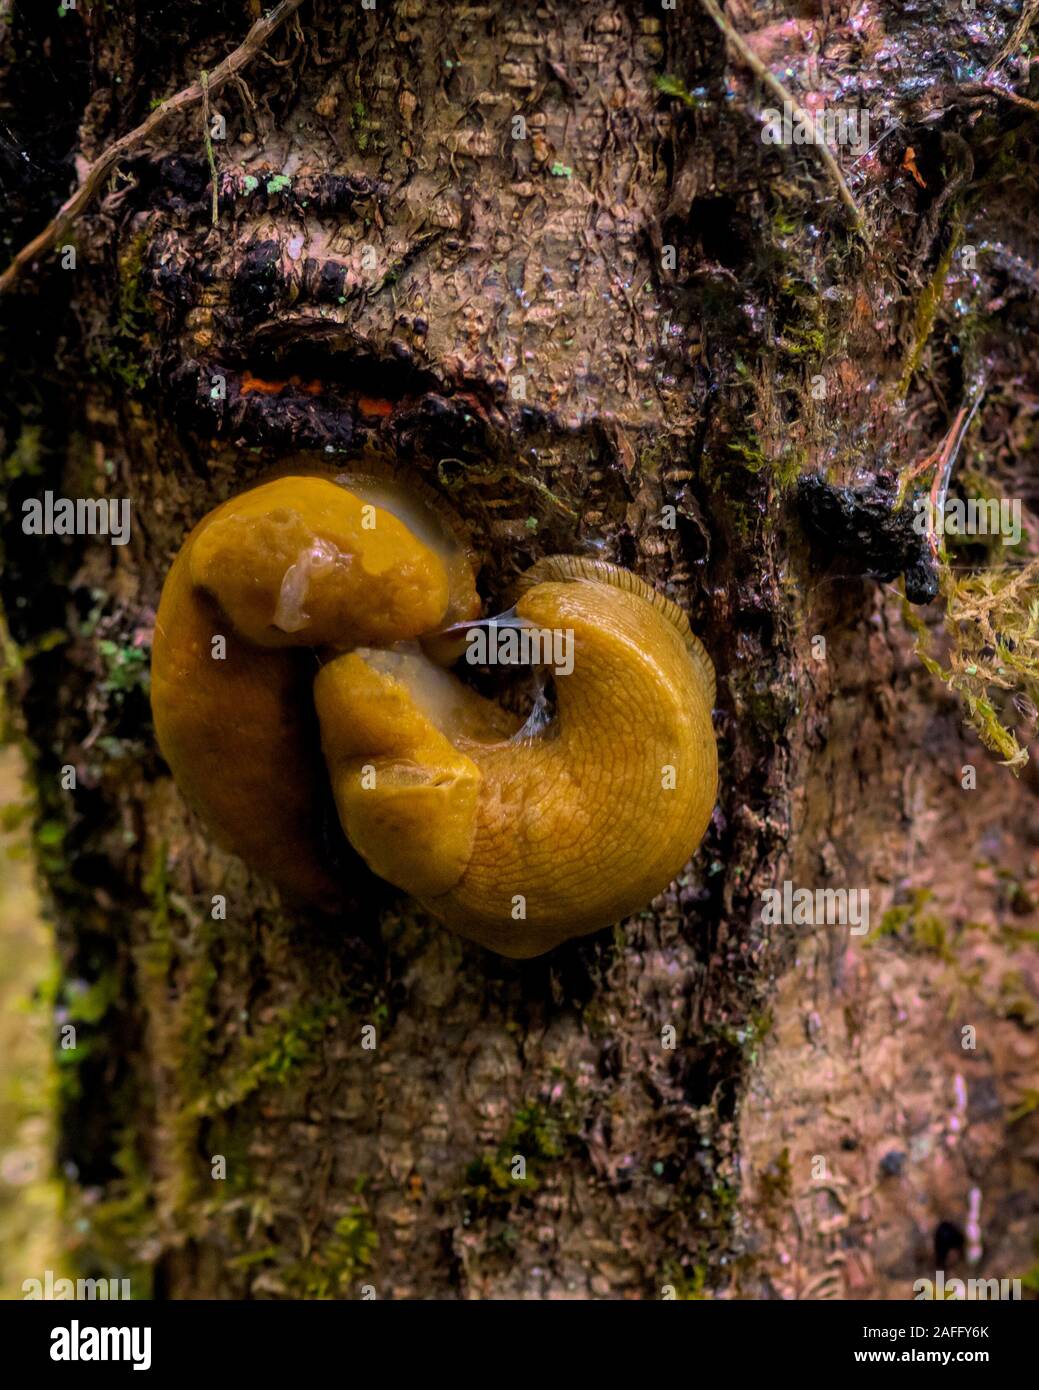 Brown Banana slugs, Ariolimax columbianus, mating on a tree in California Stock Photo